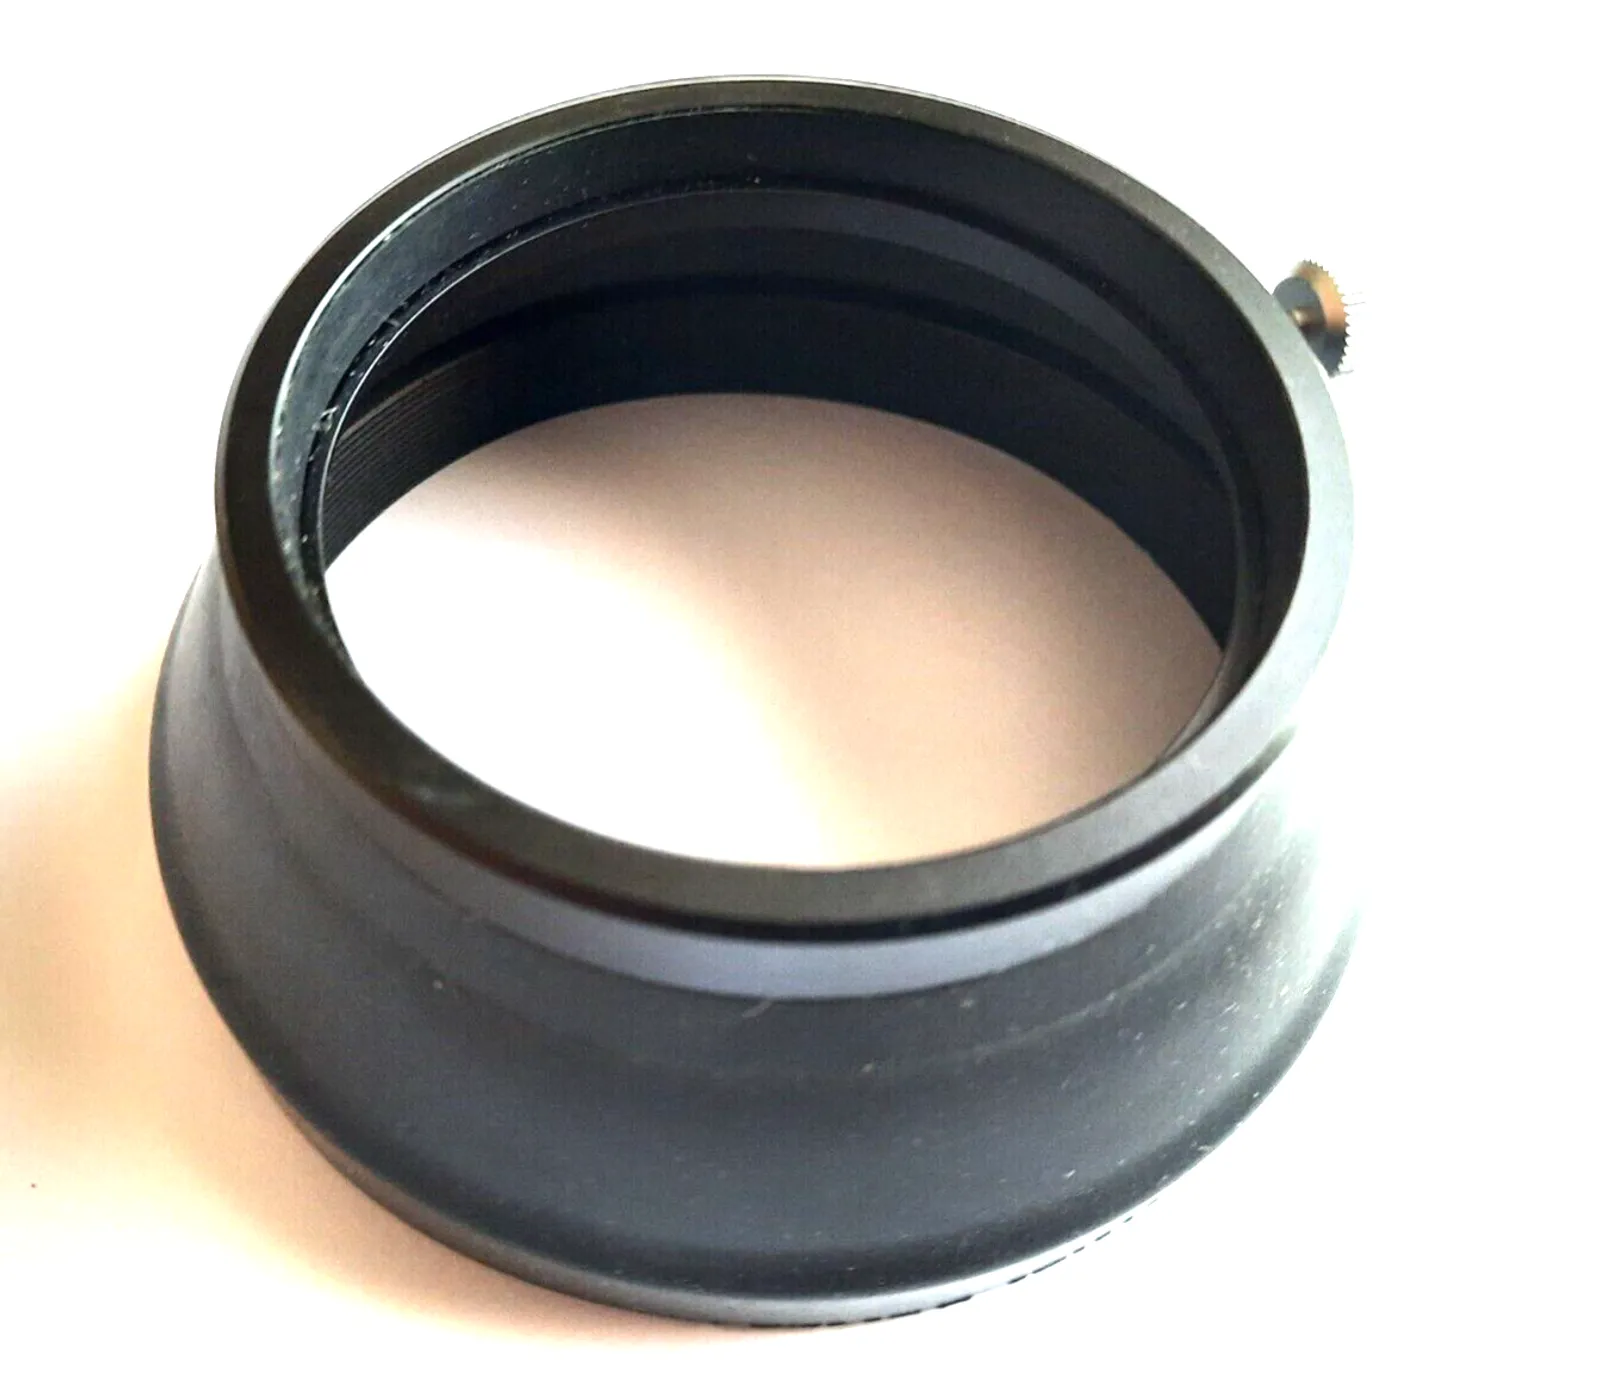 Nikon / Minolta - Generic Rubber - 70mm Lens Hood - Clamp on Style